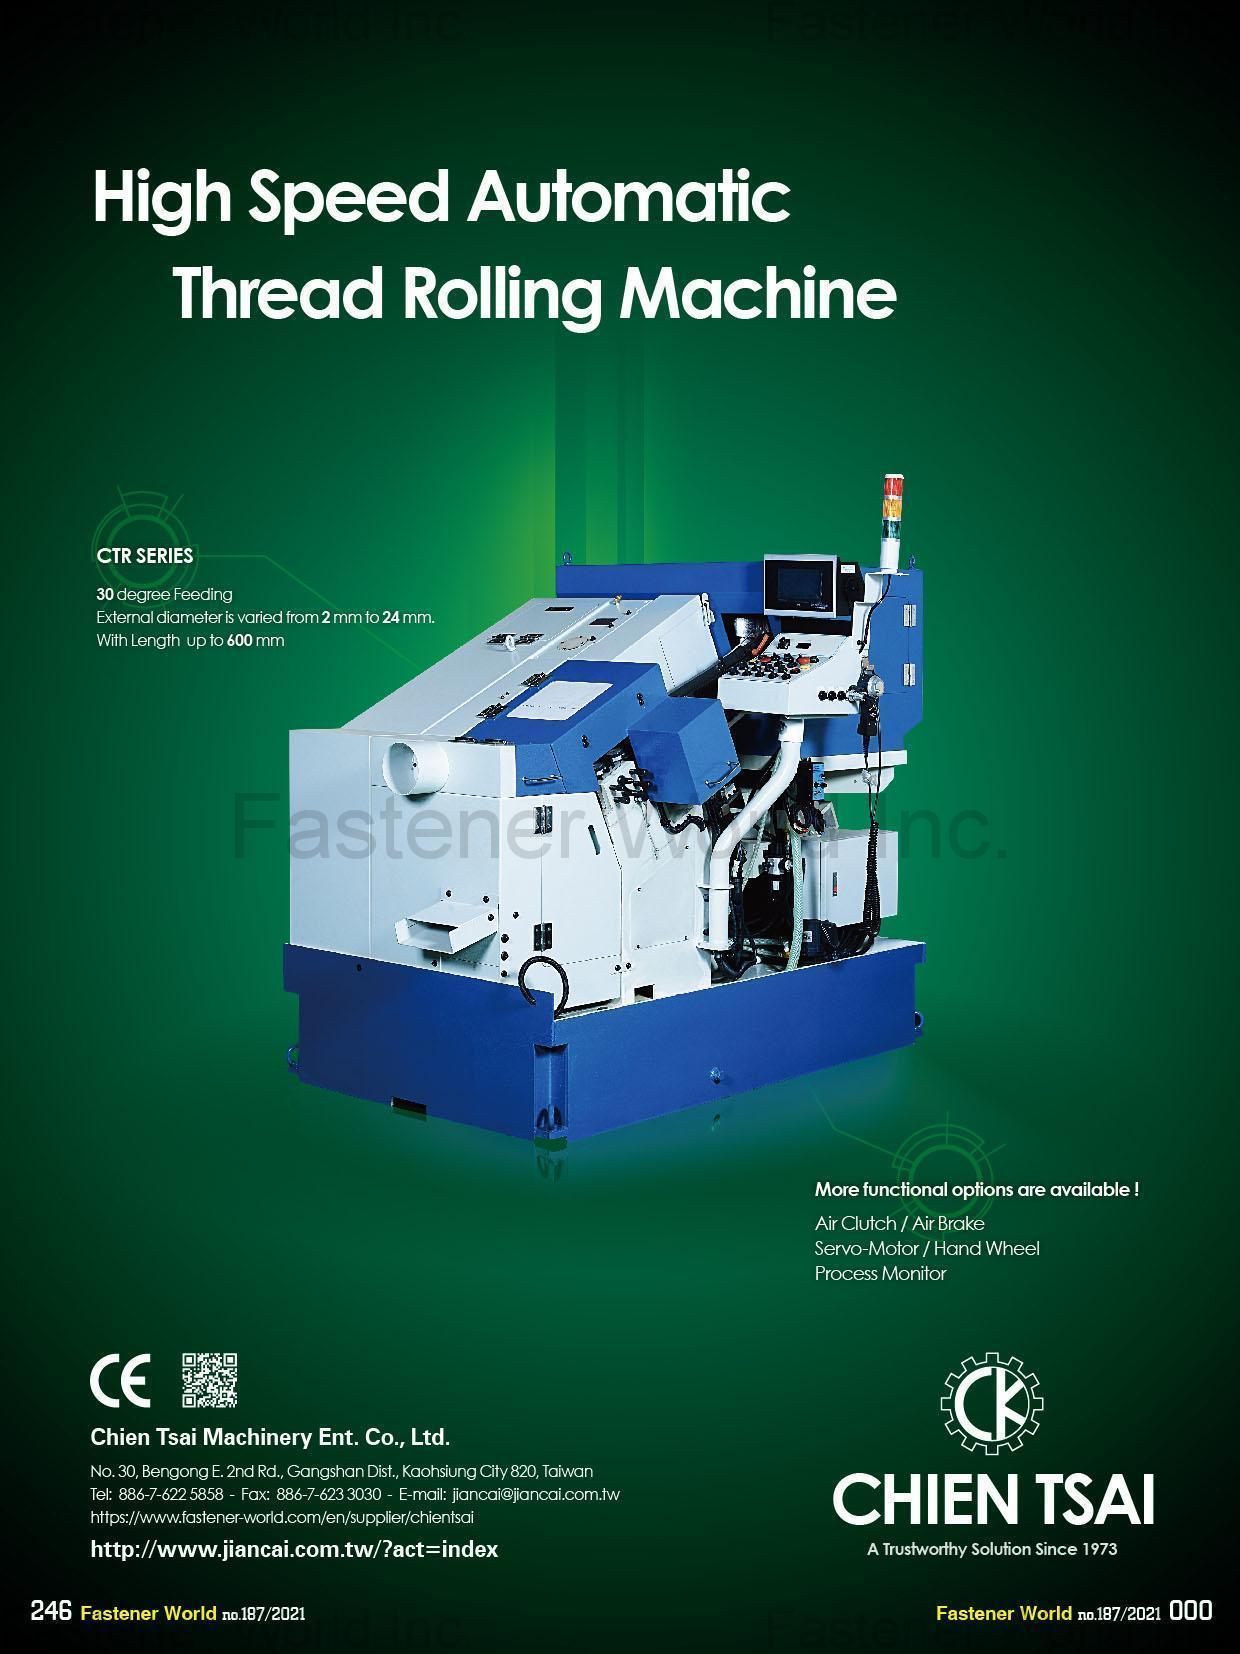 CHIEN TSAI MACHINERY ENTERPRISE CO., LTD. , High Speed Automatic Thread Rolling Machine